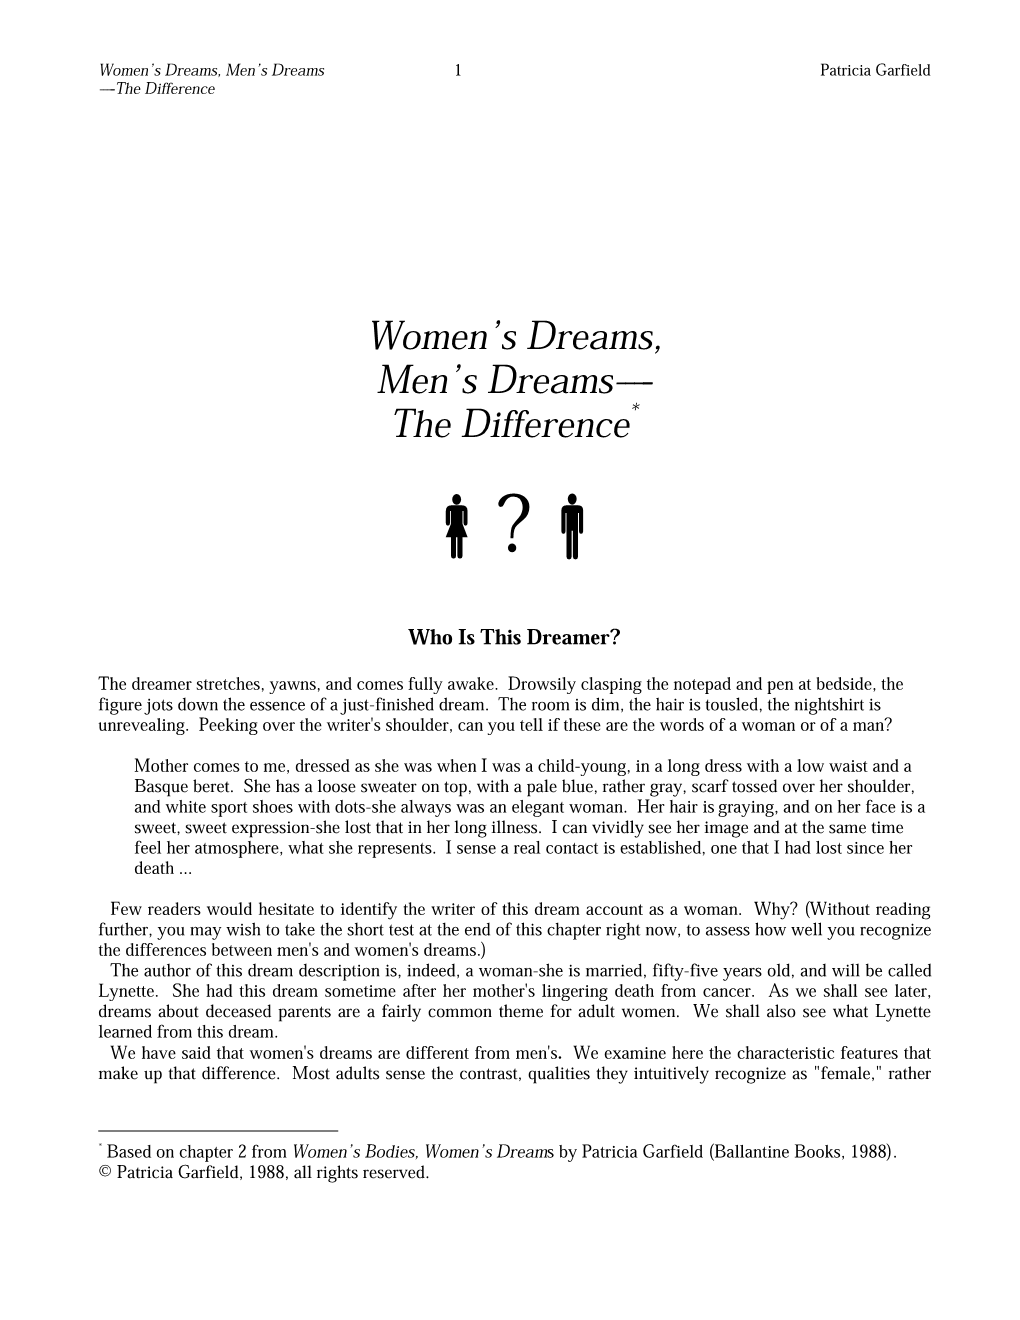 Women's Dreams, Men's Dreams---The Difference*